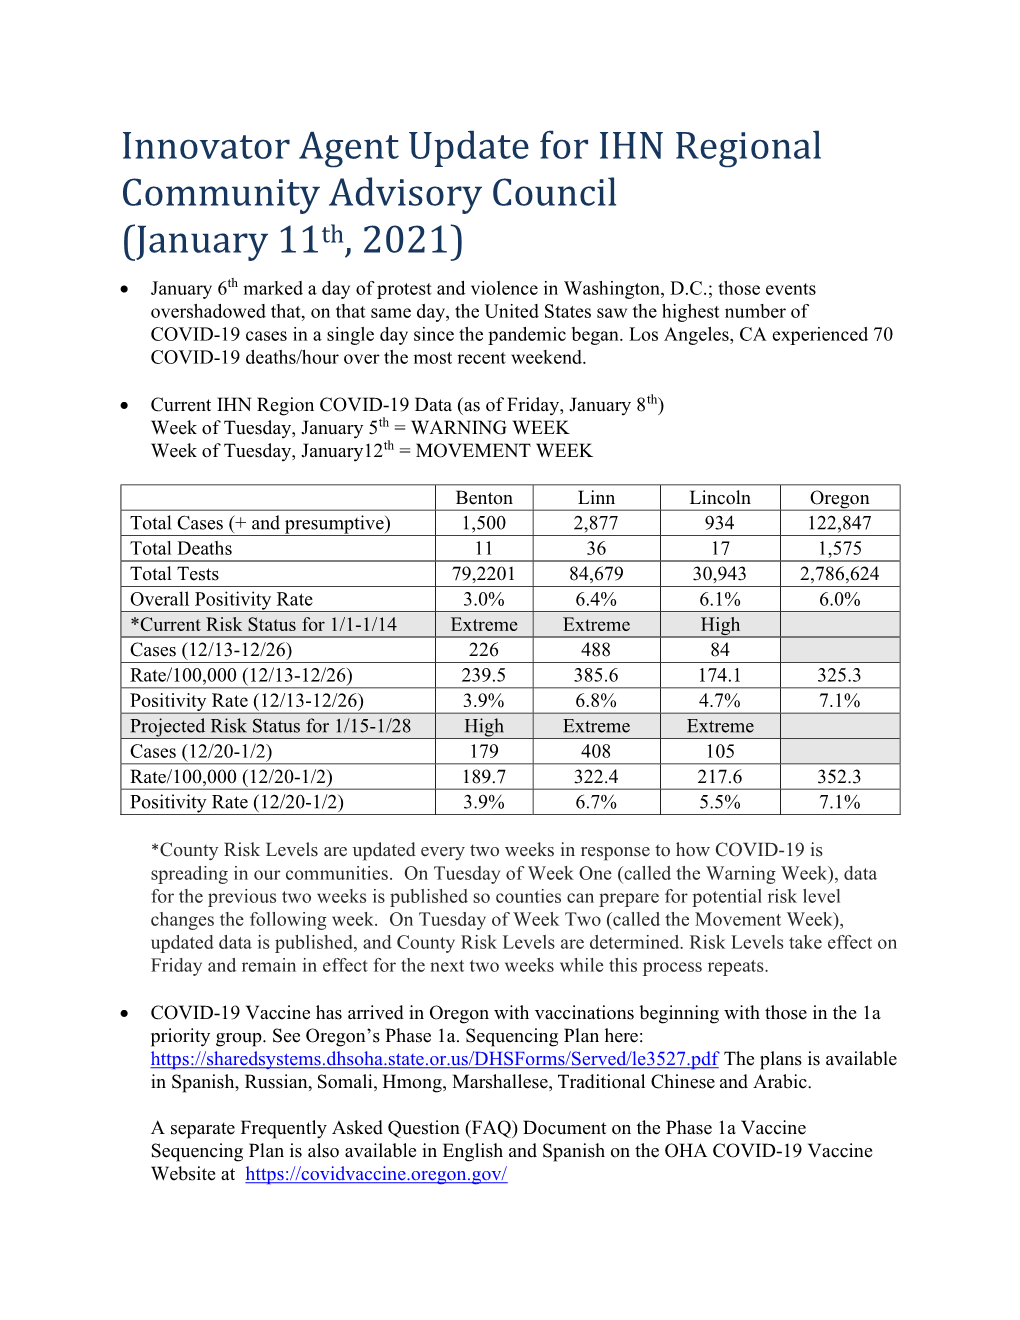 IHN Regional Community Advisory Council IA Update 1-11-2021